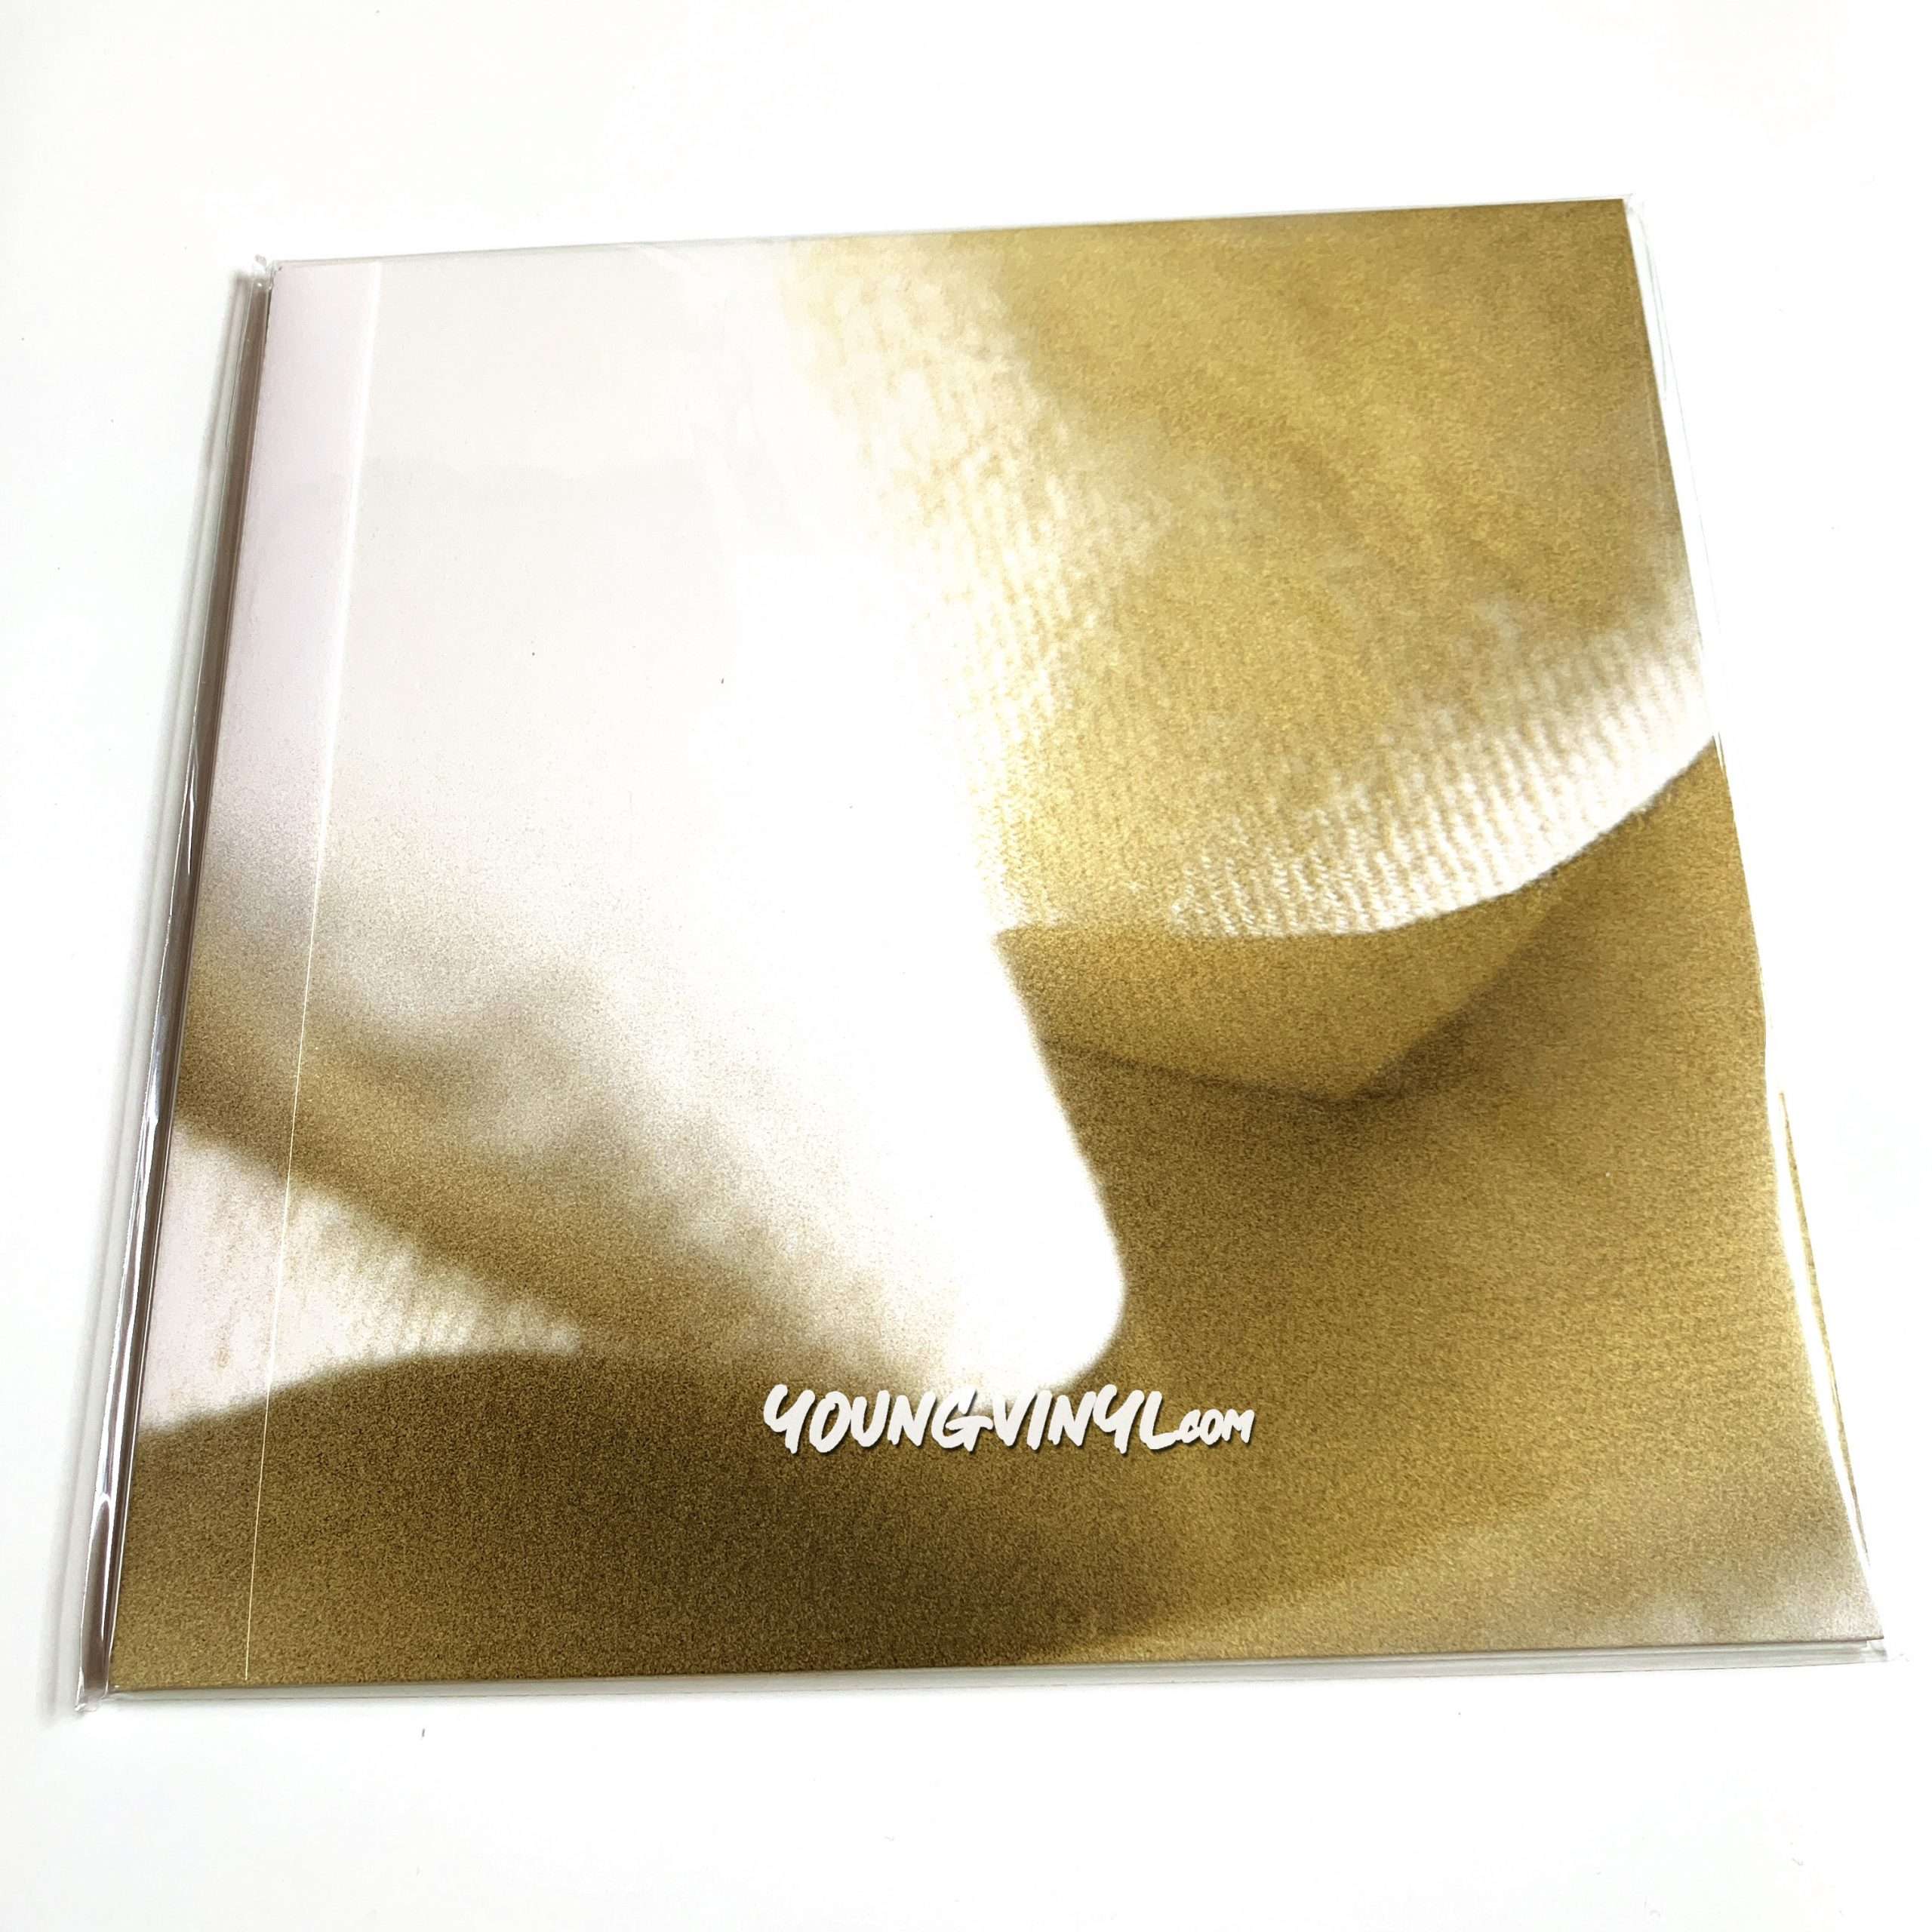 Ayano Kaneko Yosuga Vinyl Clear カネコアヤノ よすが - Young Vinyl